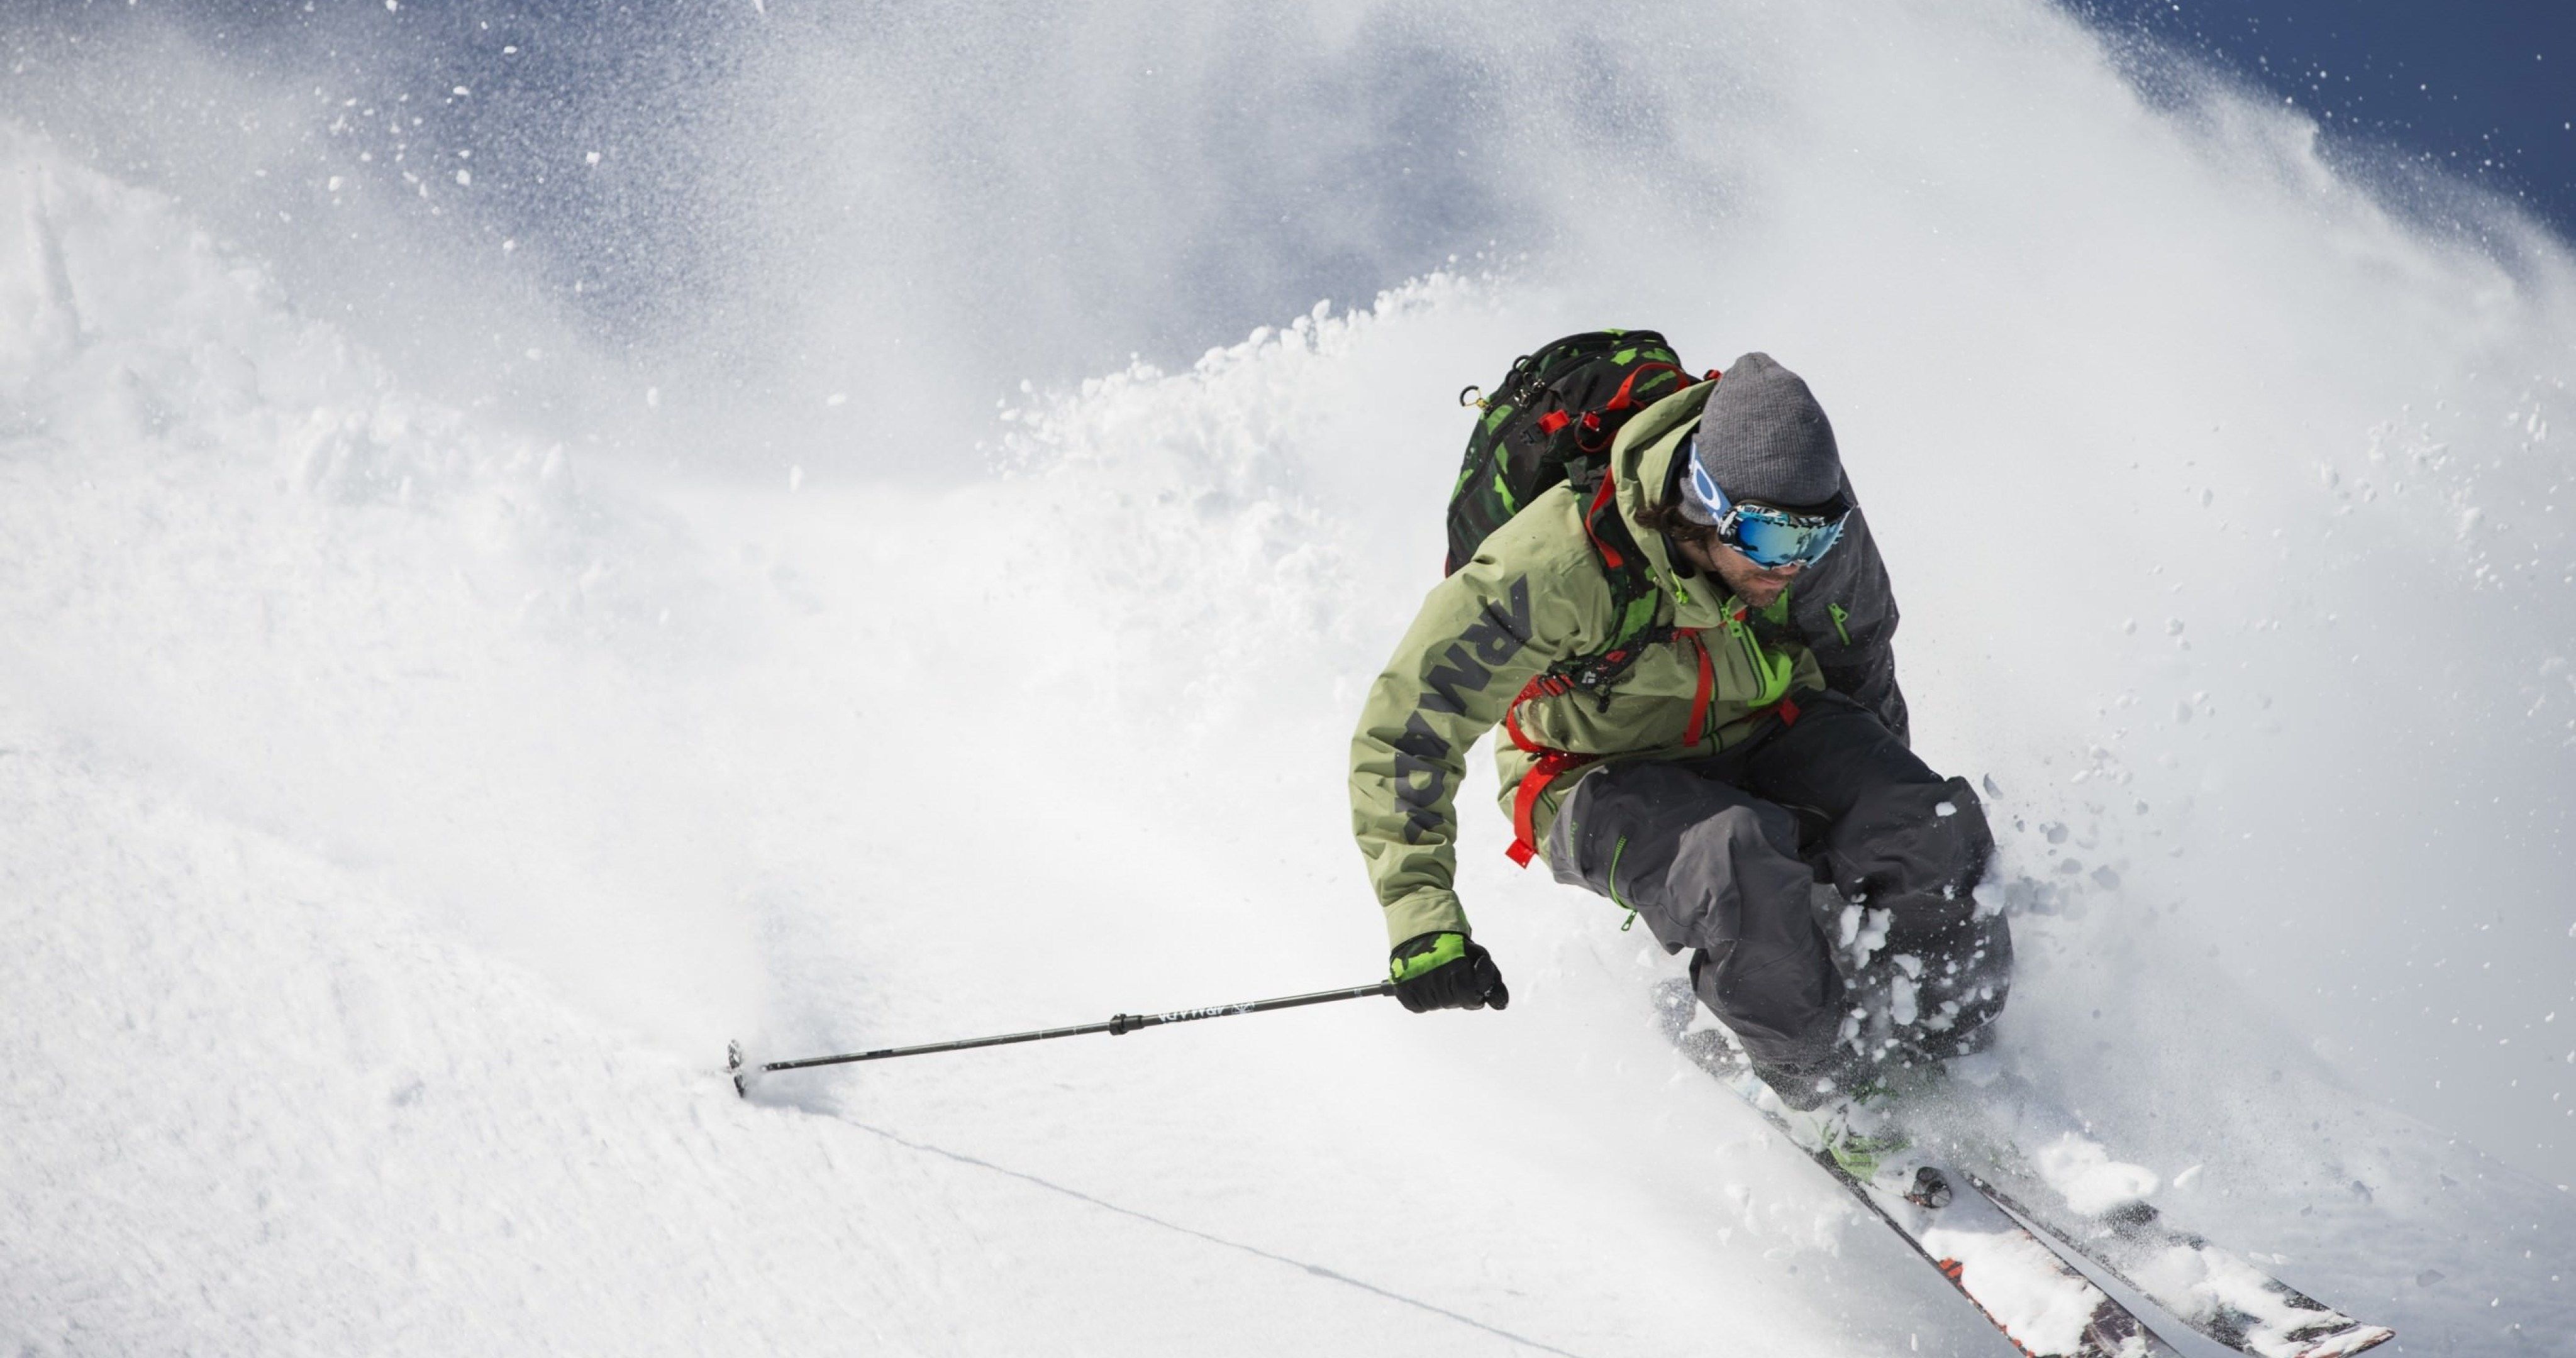 backcountry skiing freeride 4k ultra HD wallpaper High quality walls